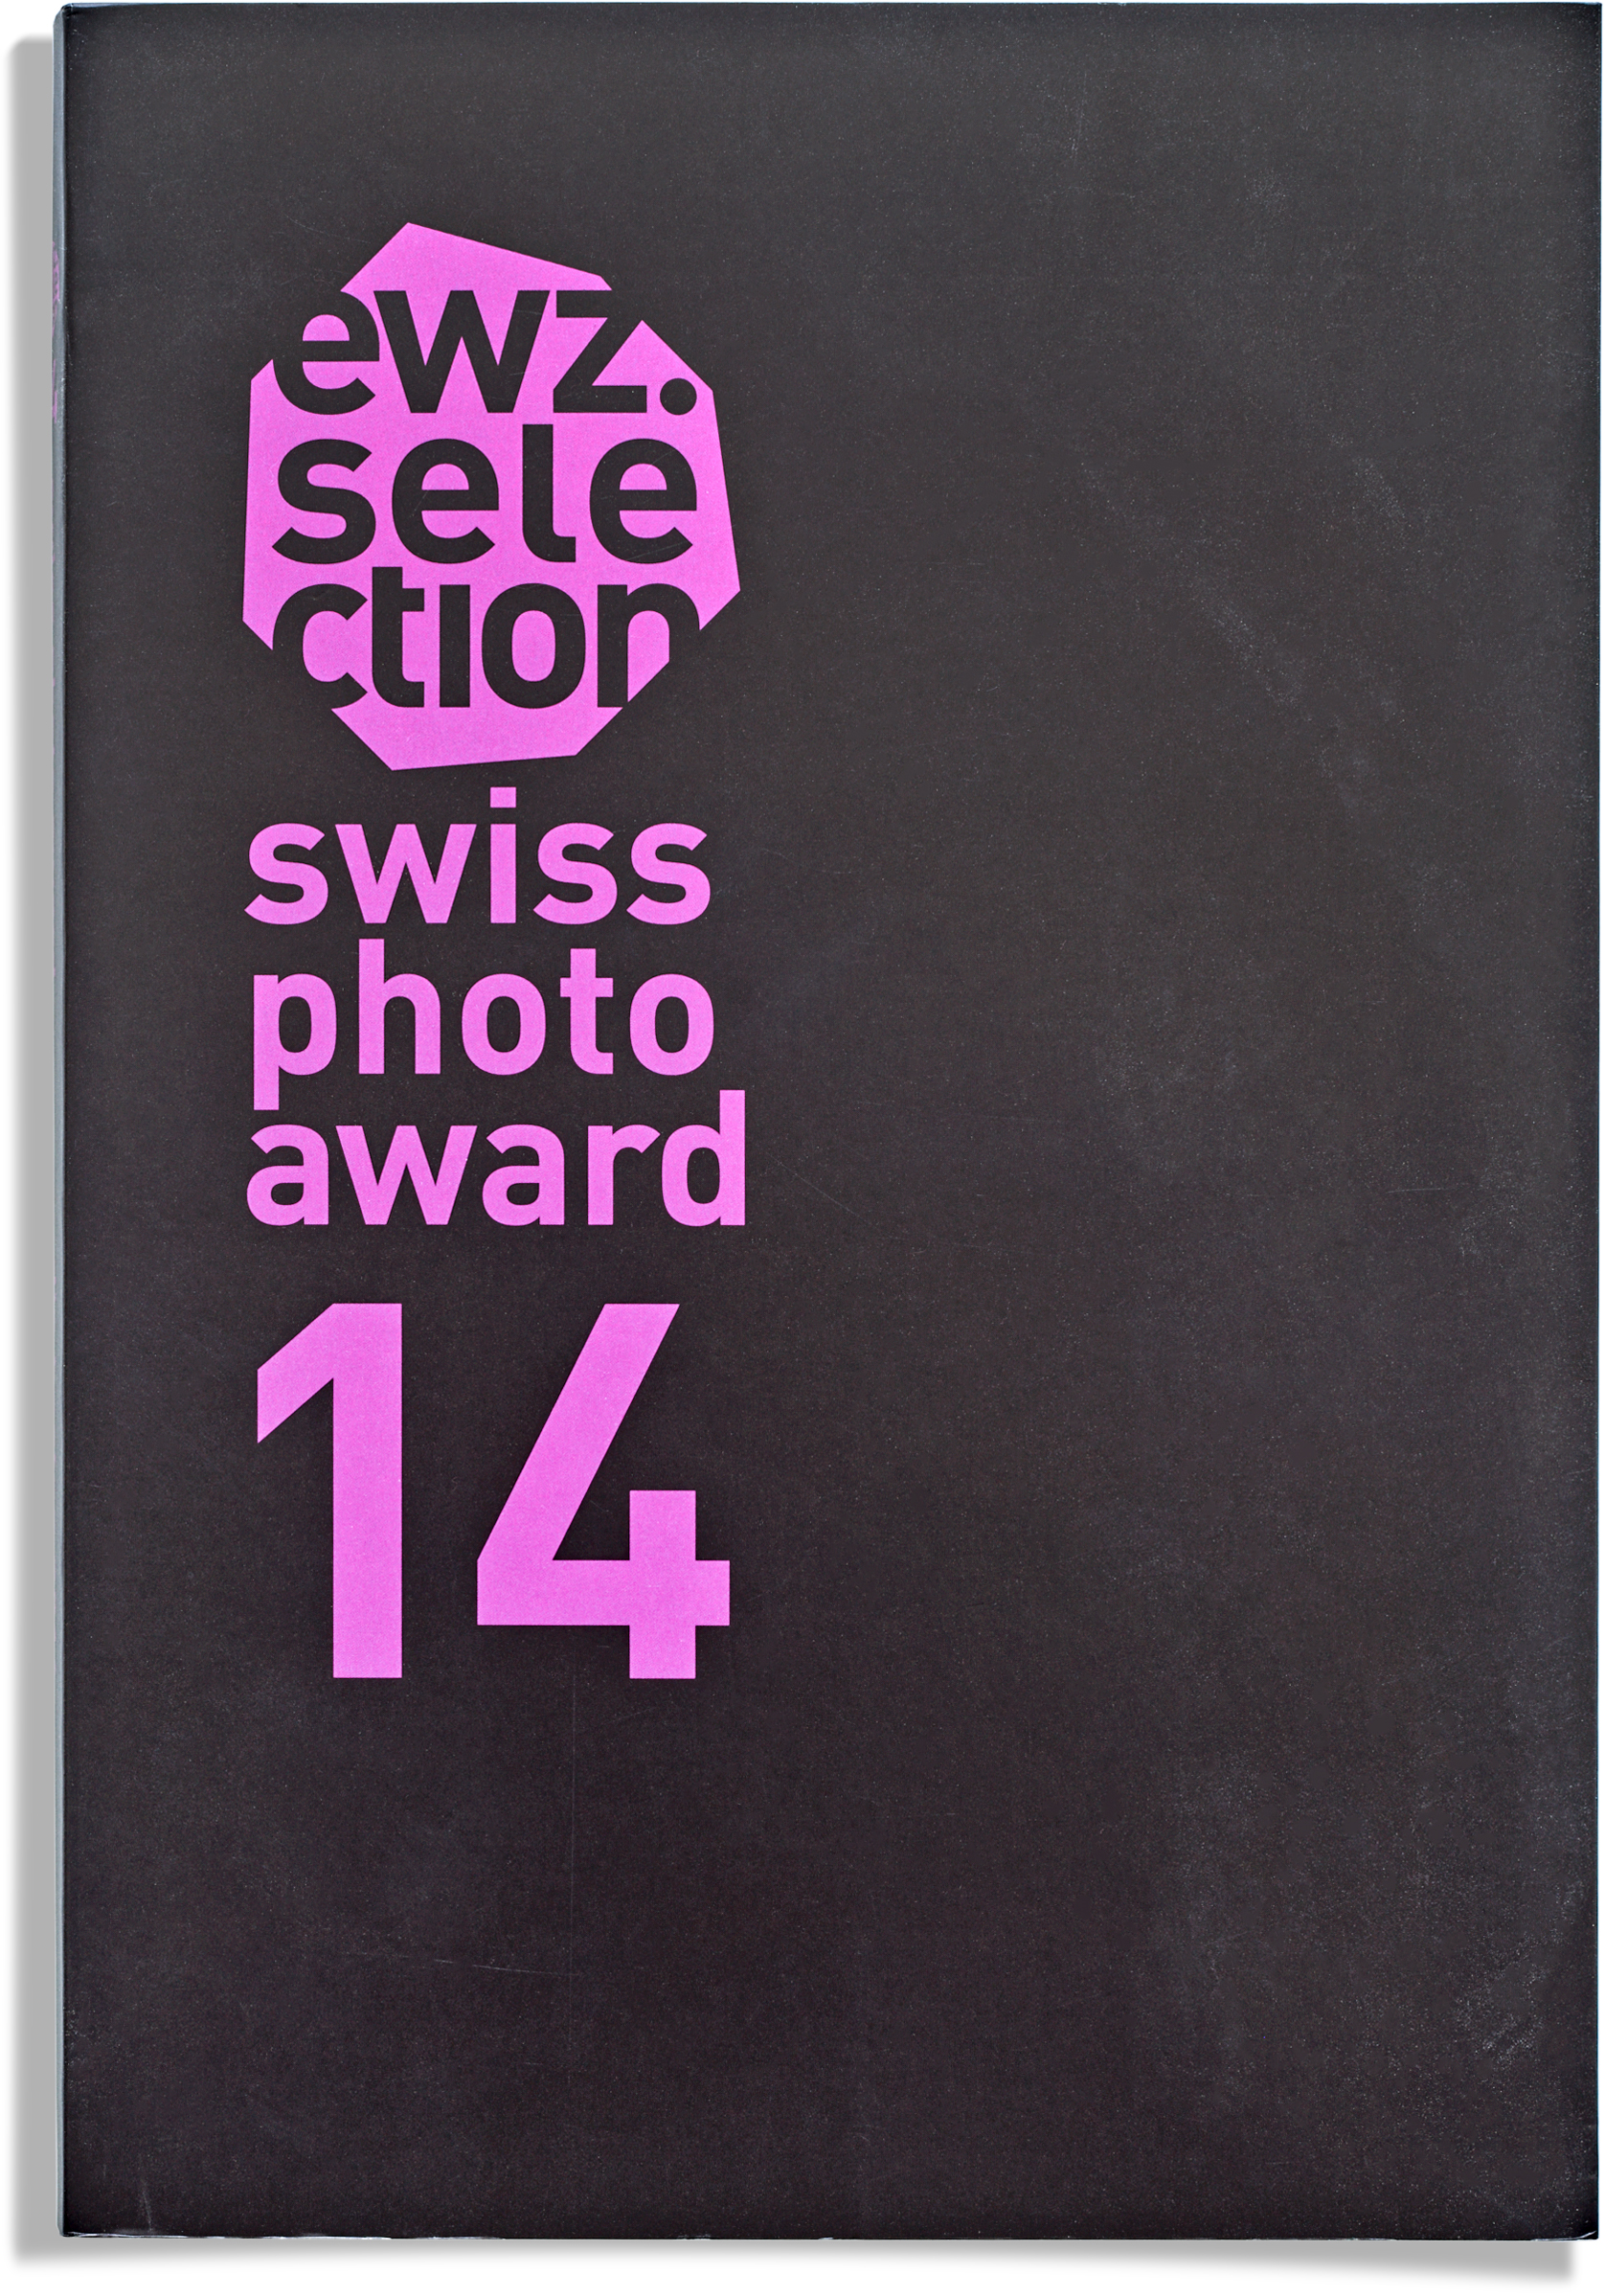 swiss photo award